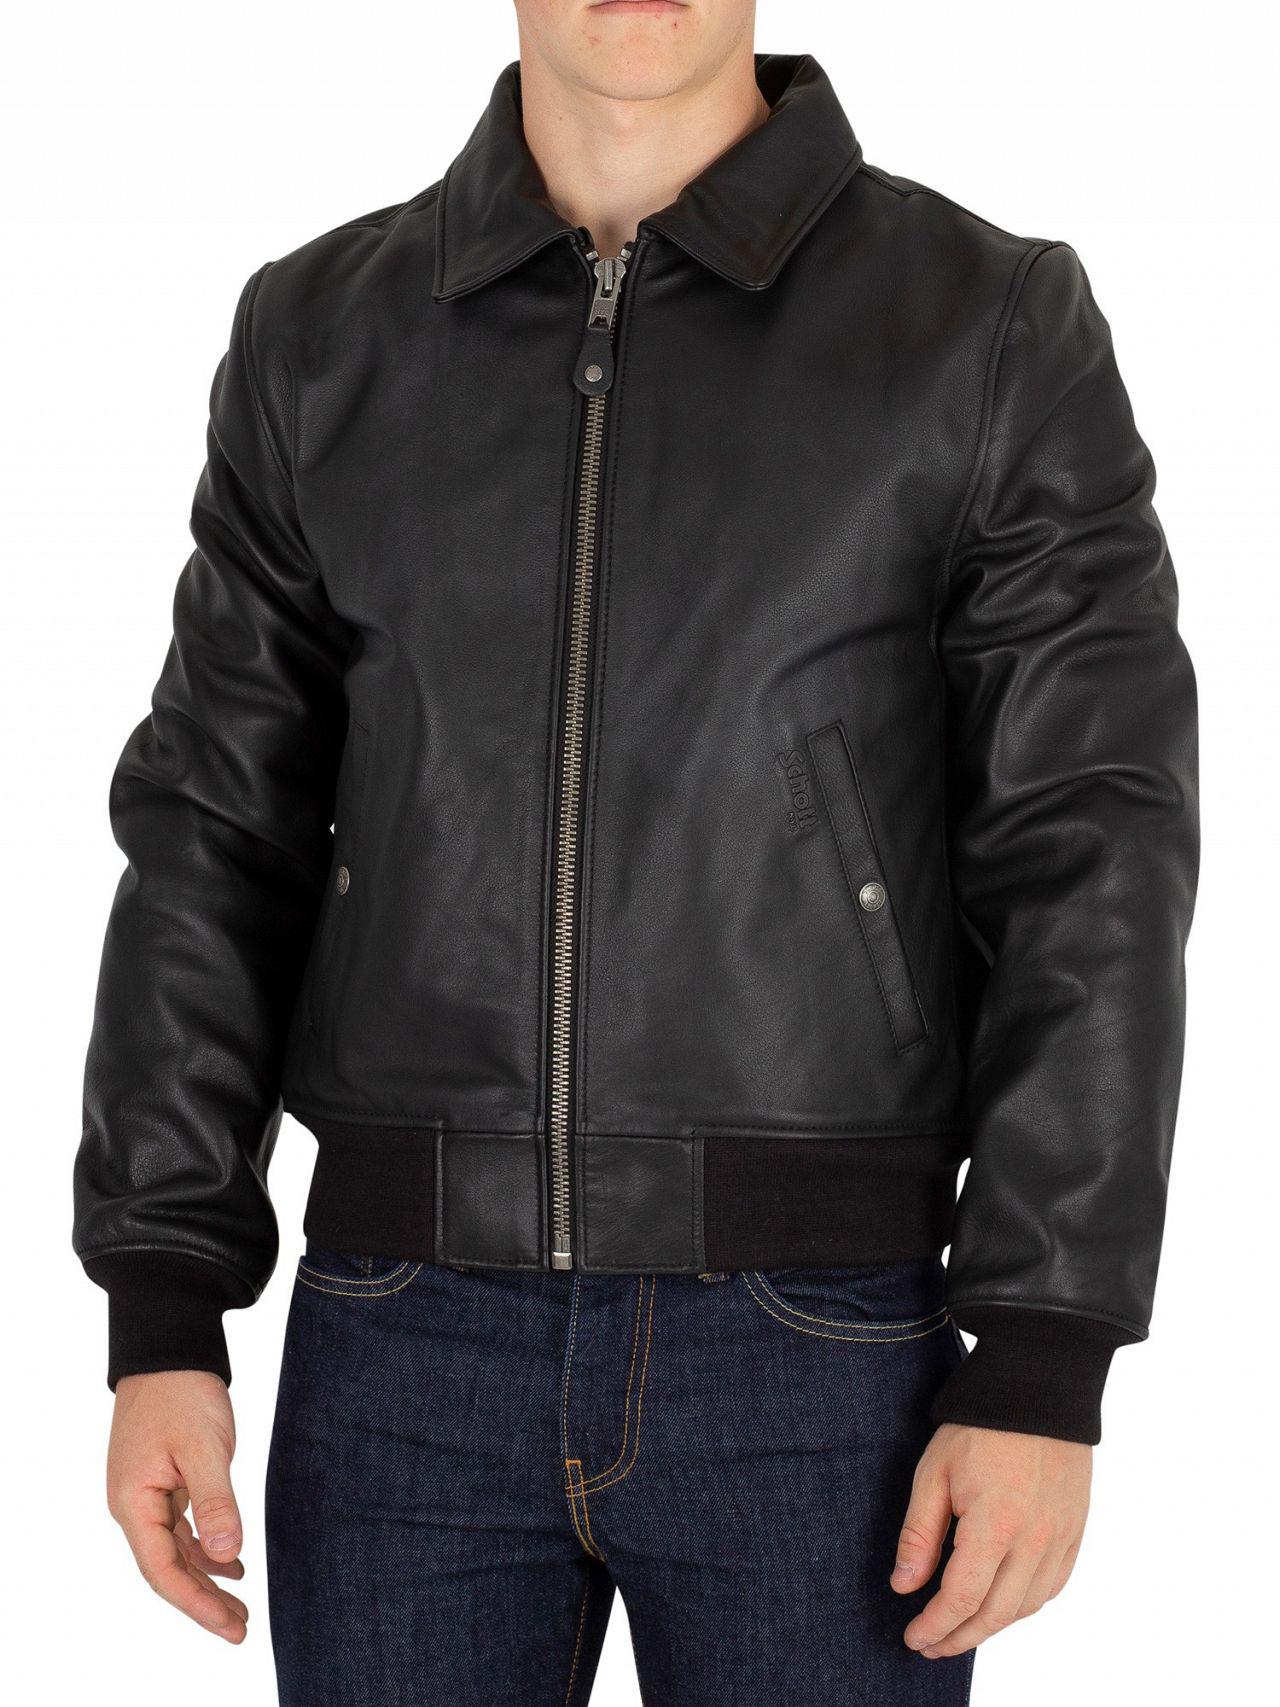 Schott Nyc Black Fur Collar Leather Jacket for Men - Lyst